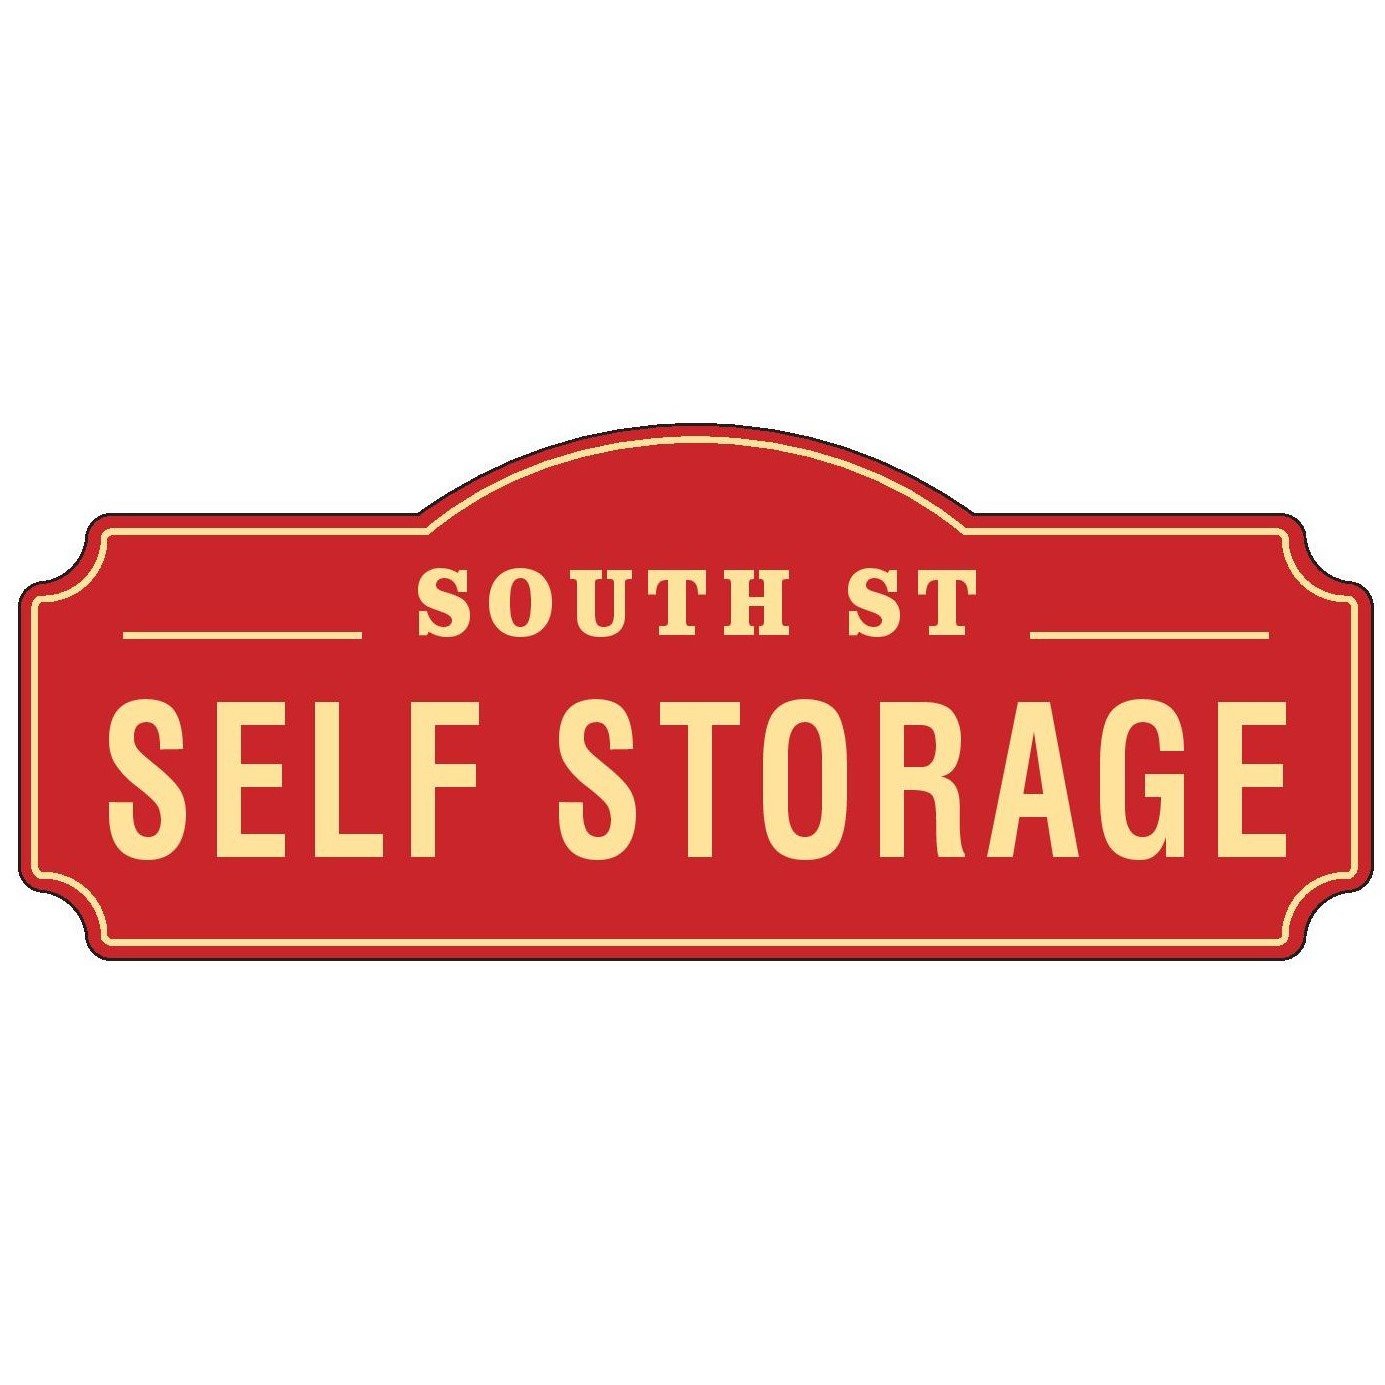 South Street Self Storage Danbury (203)744-1800